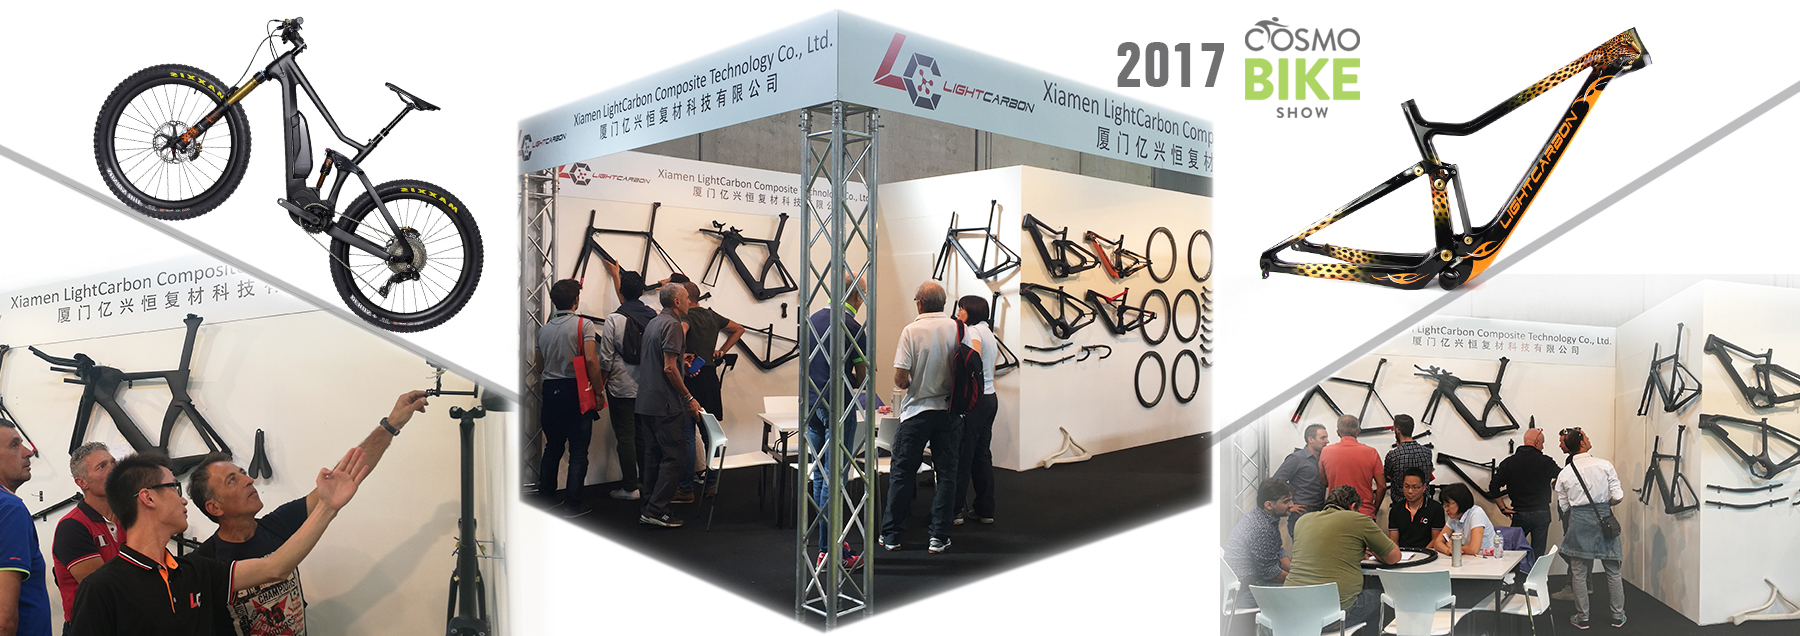 Show de bicicletas cosmo lightcarbon 2017